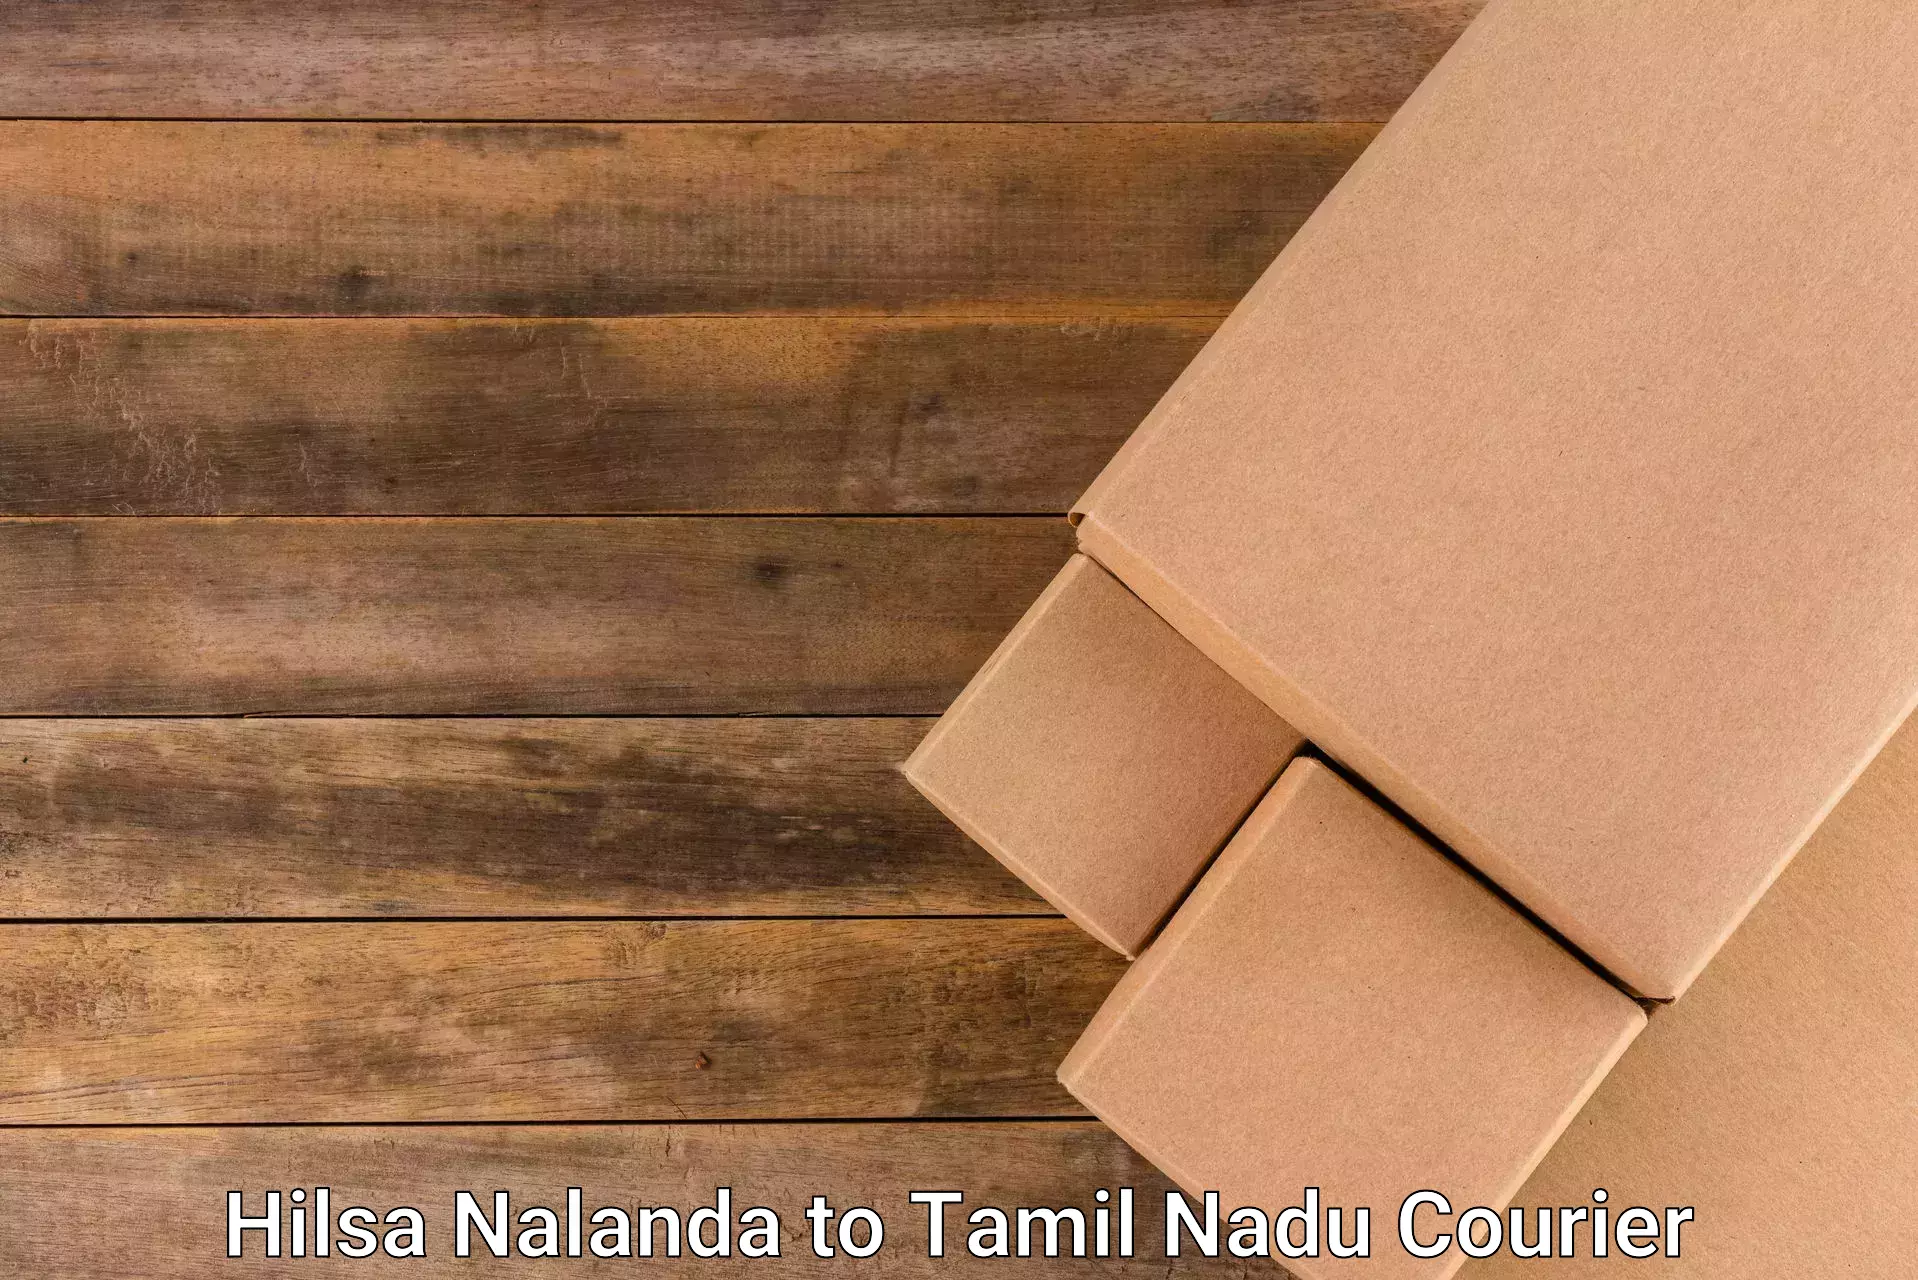 Delivery service partnership Hilsa Nalanda to Tamil Nadu